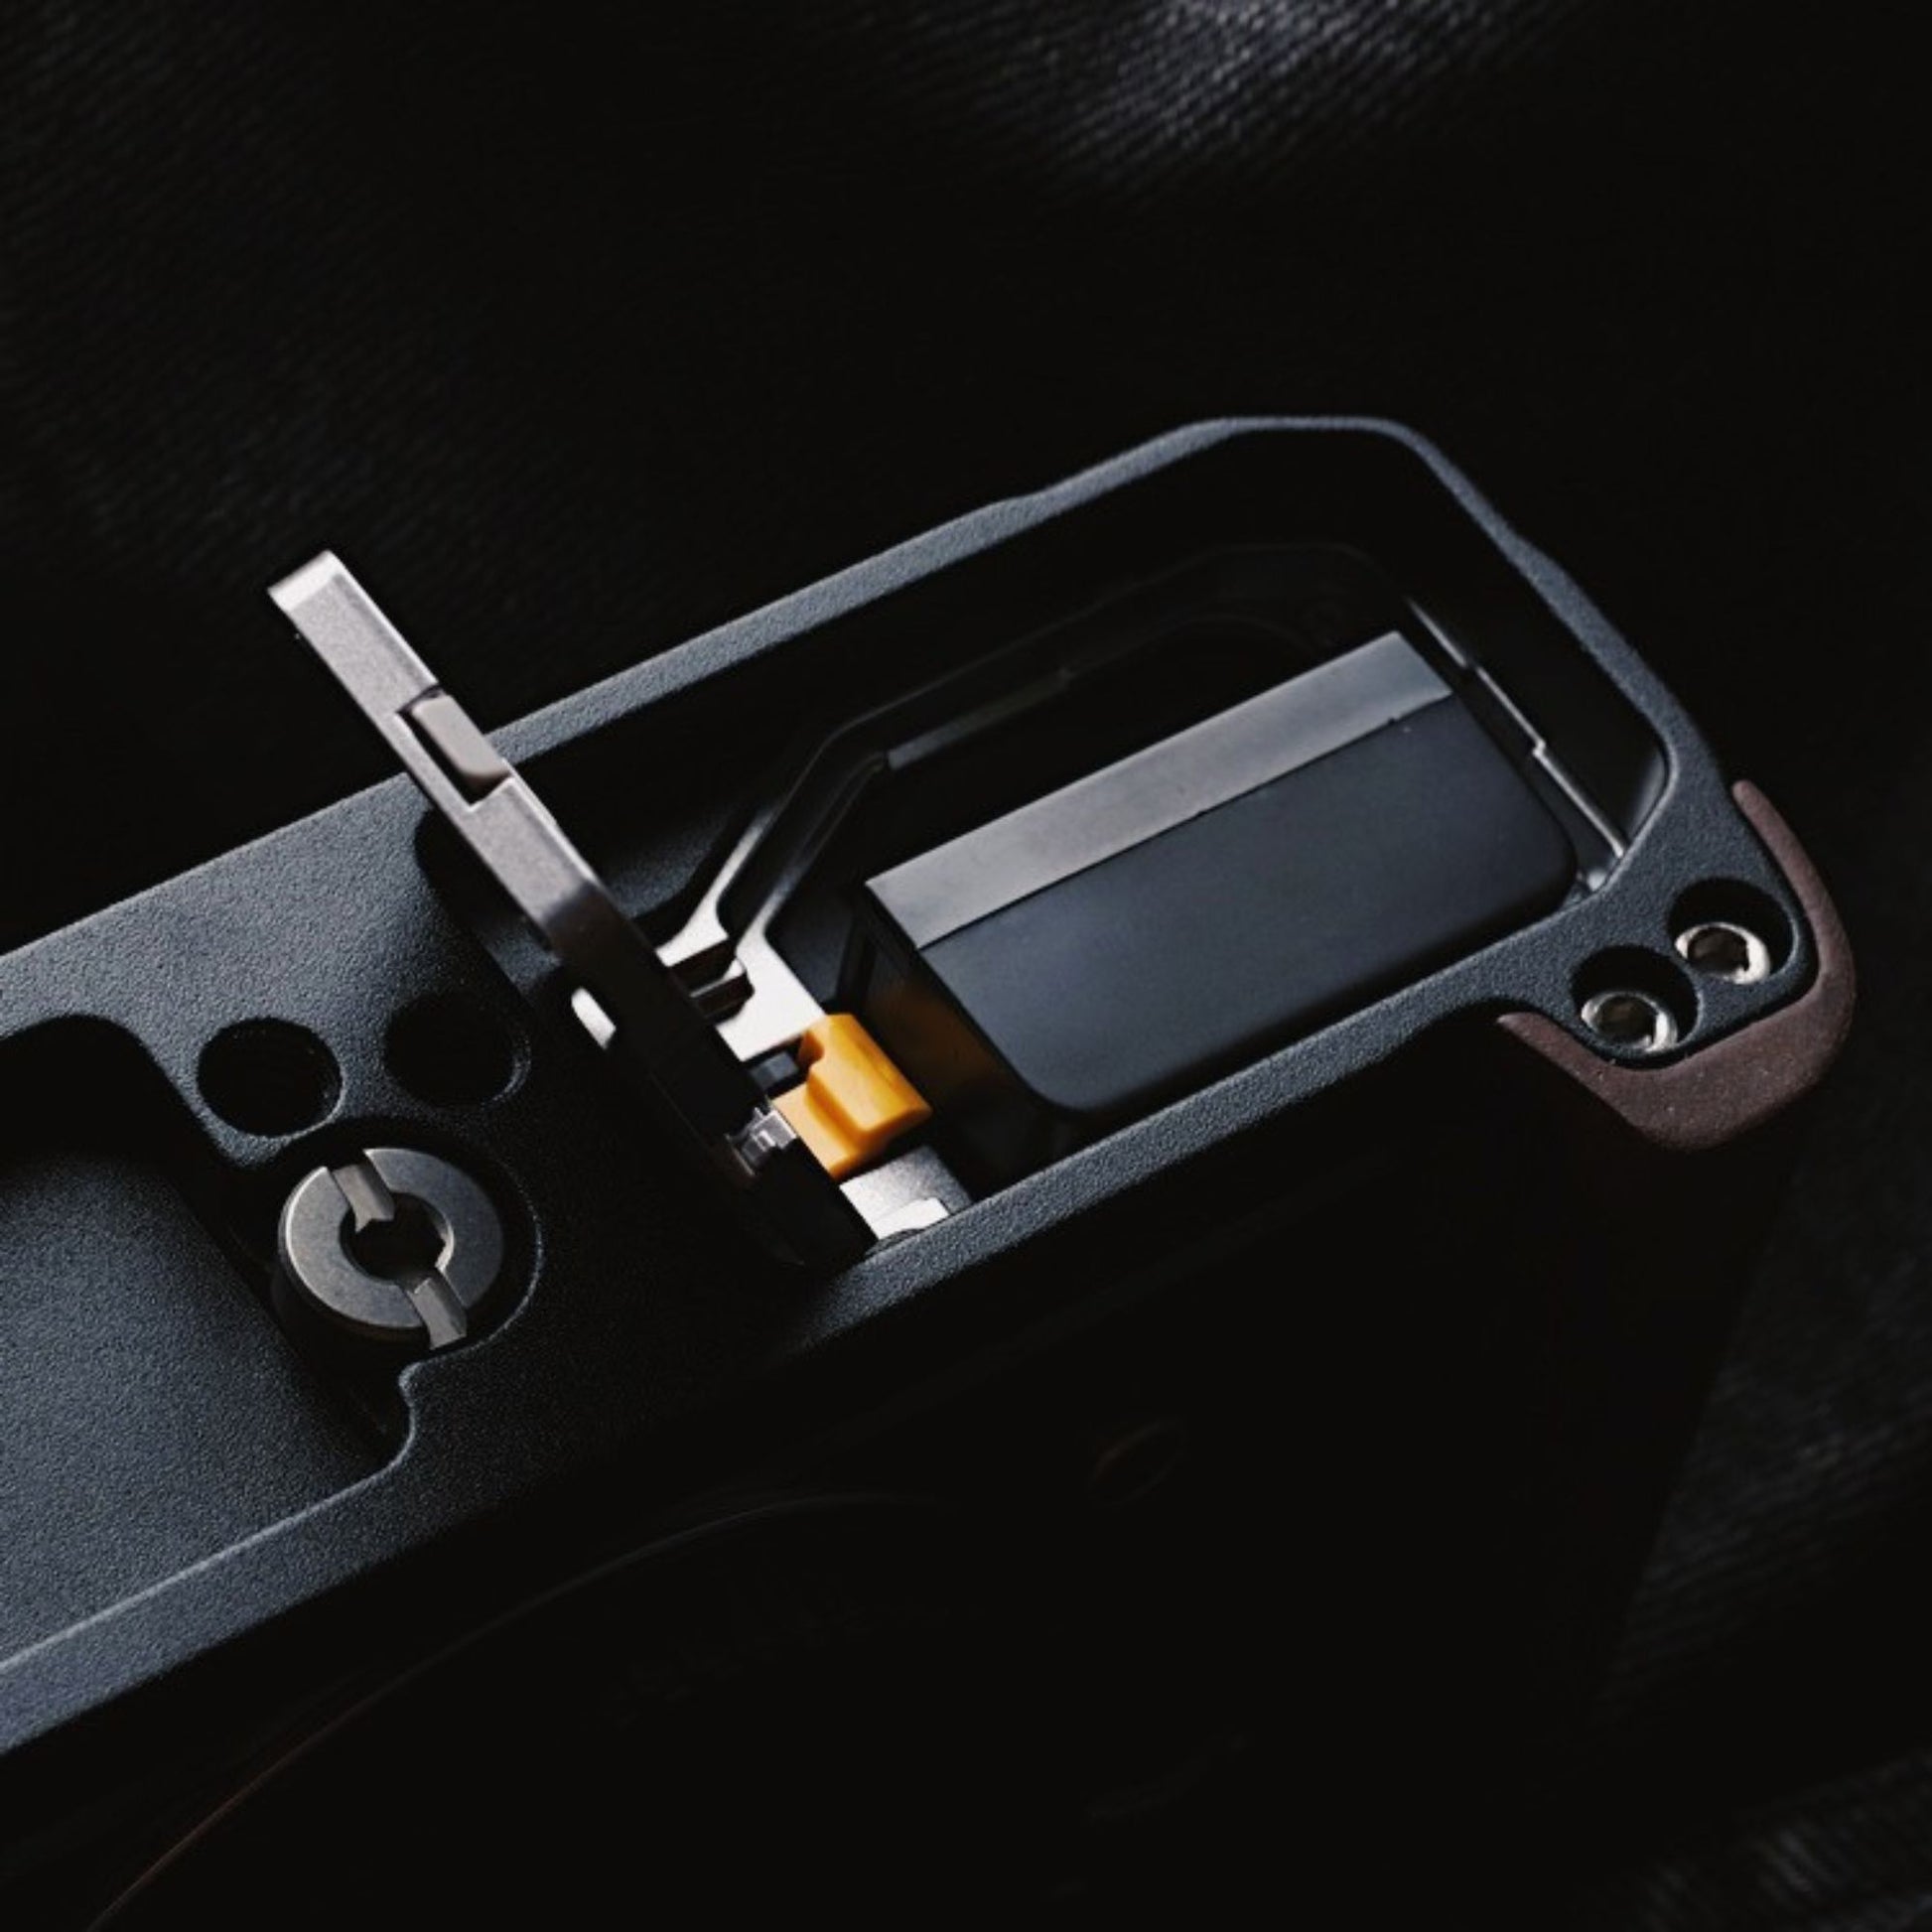 Nikon Zfc camera wooden handle hand grip wooden ZFC handgrip aluminum alloy base zfc handle arca swiss tripod mount